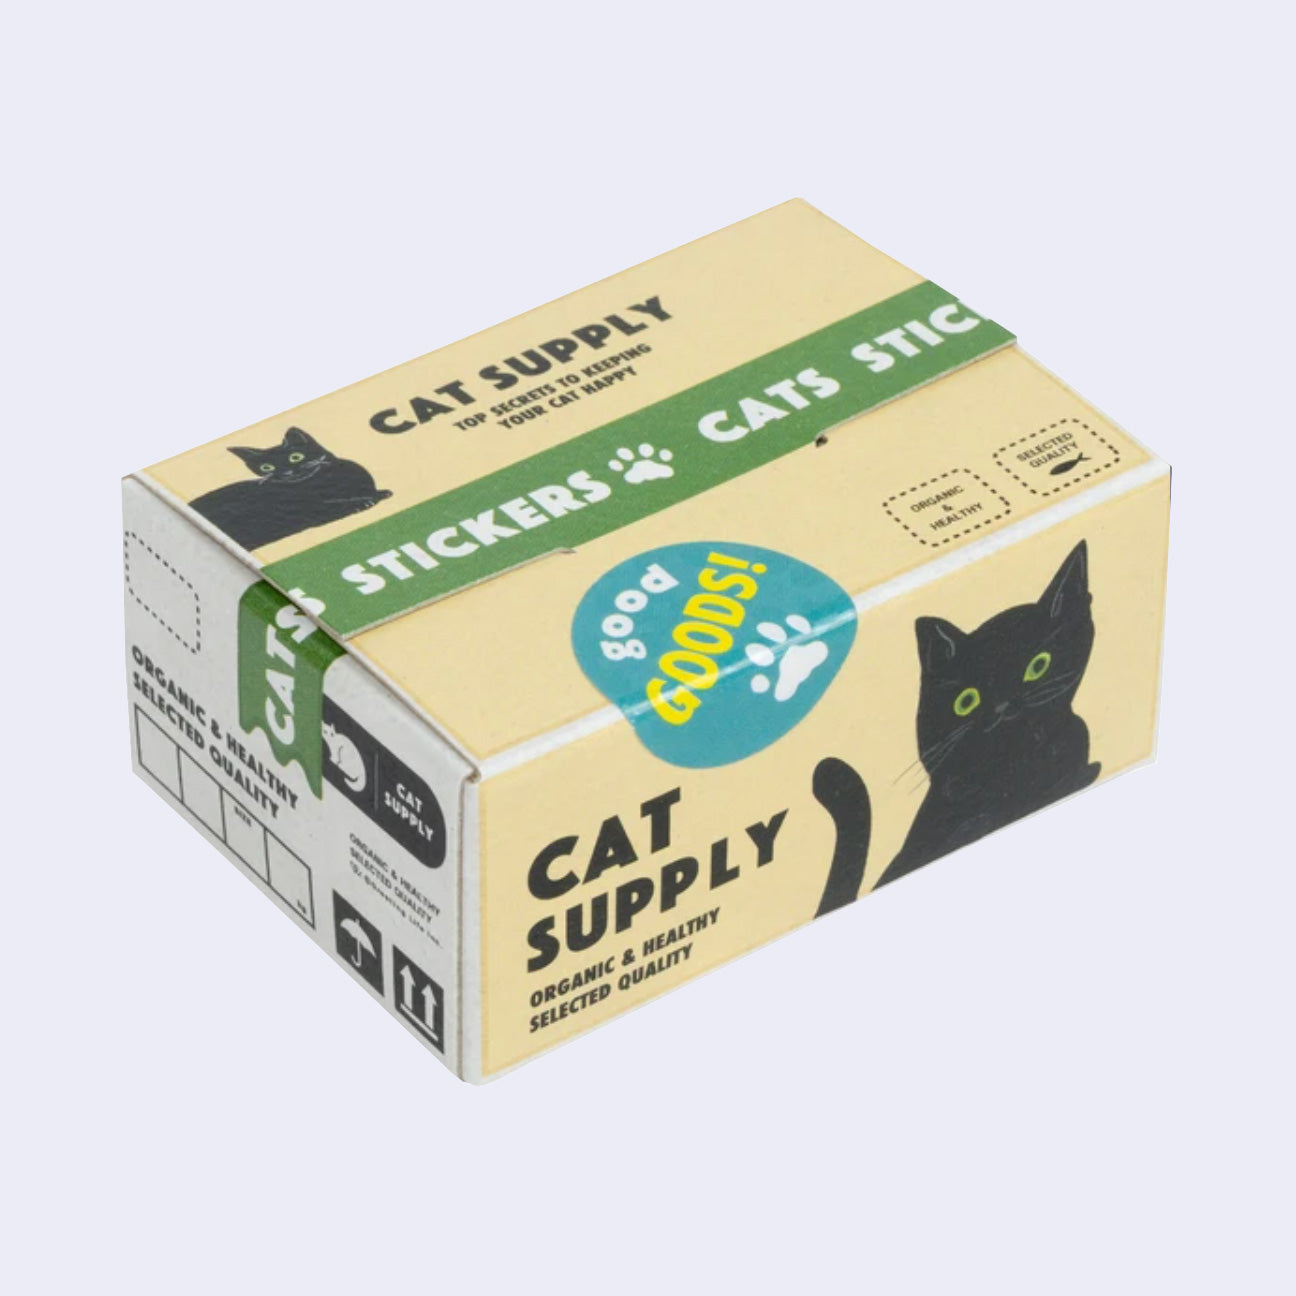 Cats Japanese Washi Tape Masking Tape Sets in a Mini Box - Sweet